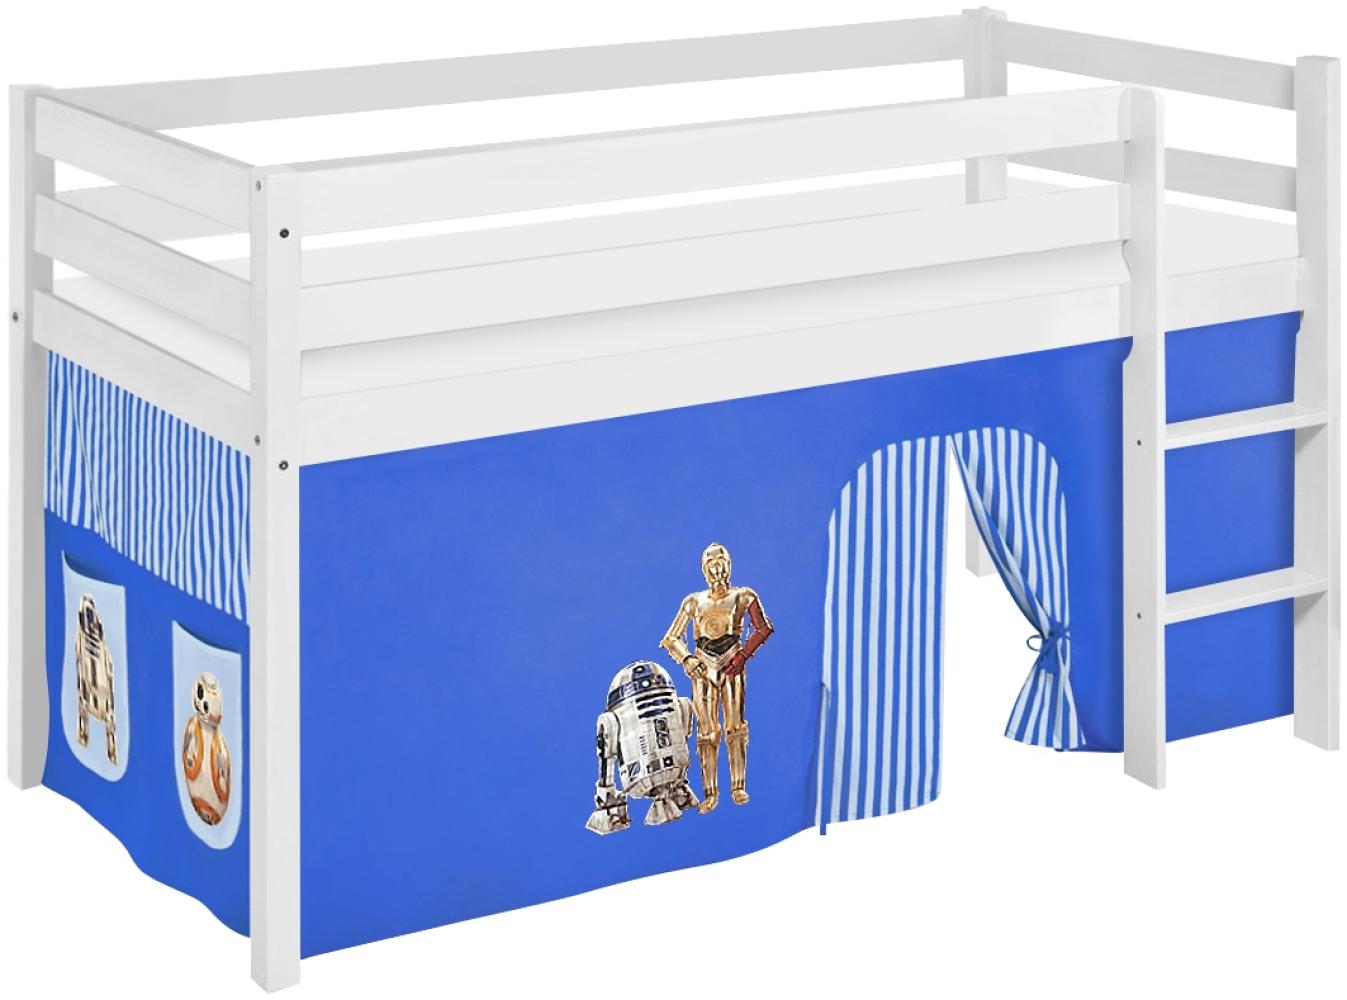 Lilokids 'Jelle' Spielbett 90 x 190 cm, Star Wars Blau, Kiefer massiv, mit Vorhang Bild 1